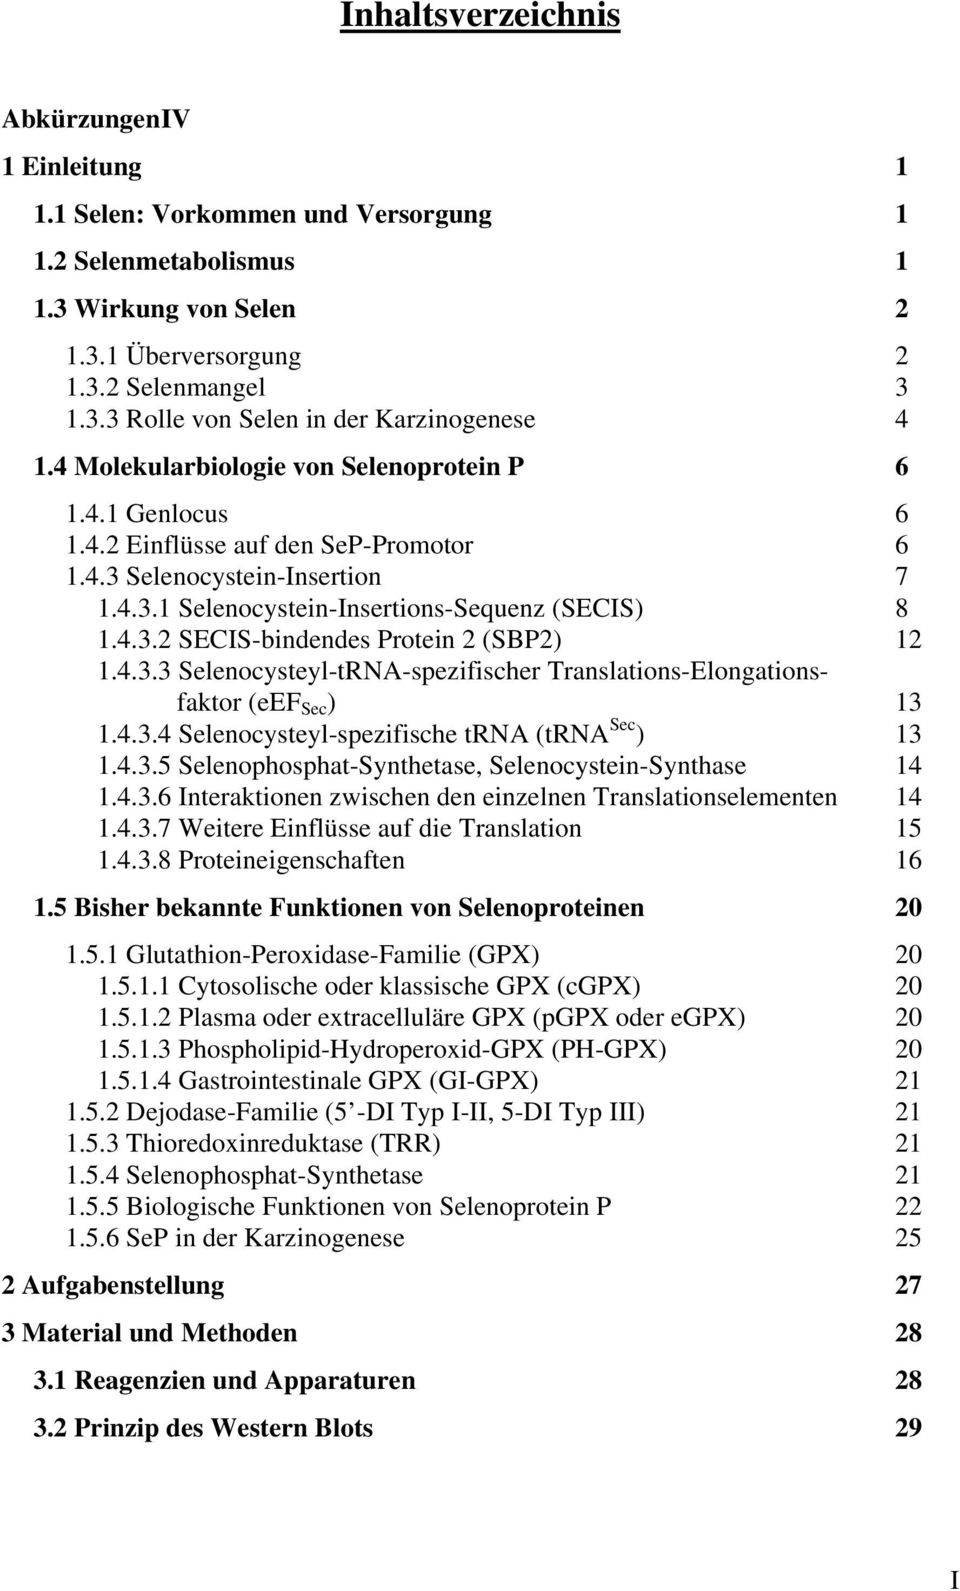 4.3.3 Selenocysteyl-tRNA-spezifischer Translations-Elongationsfaktor (eef Sec ) 13 1.4.3.4 Selenocysteyl-spezifische trna (trna Sec ) 13 1.4.3.5 Selenophosphat-Synthetase, Selenocystein-Synthase 14 1.